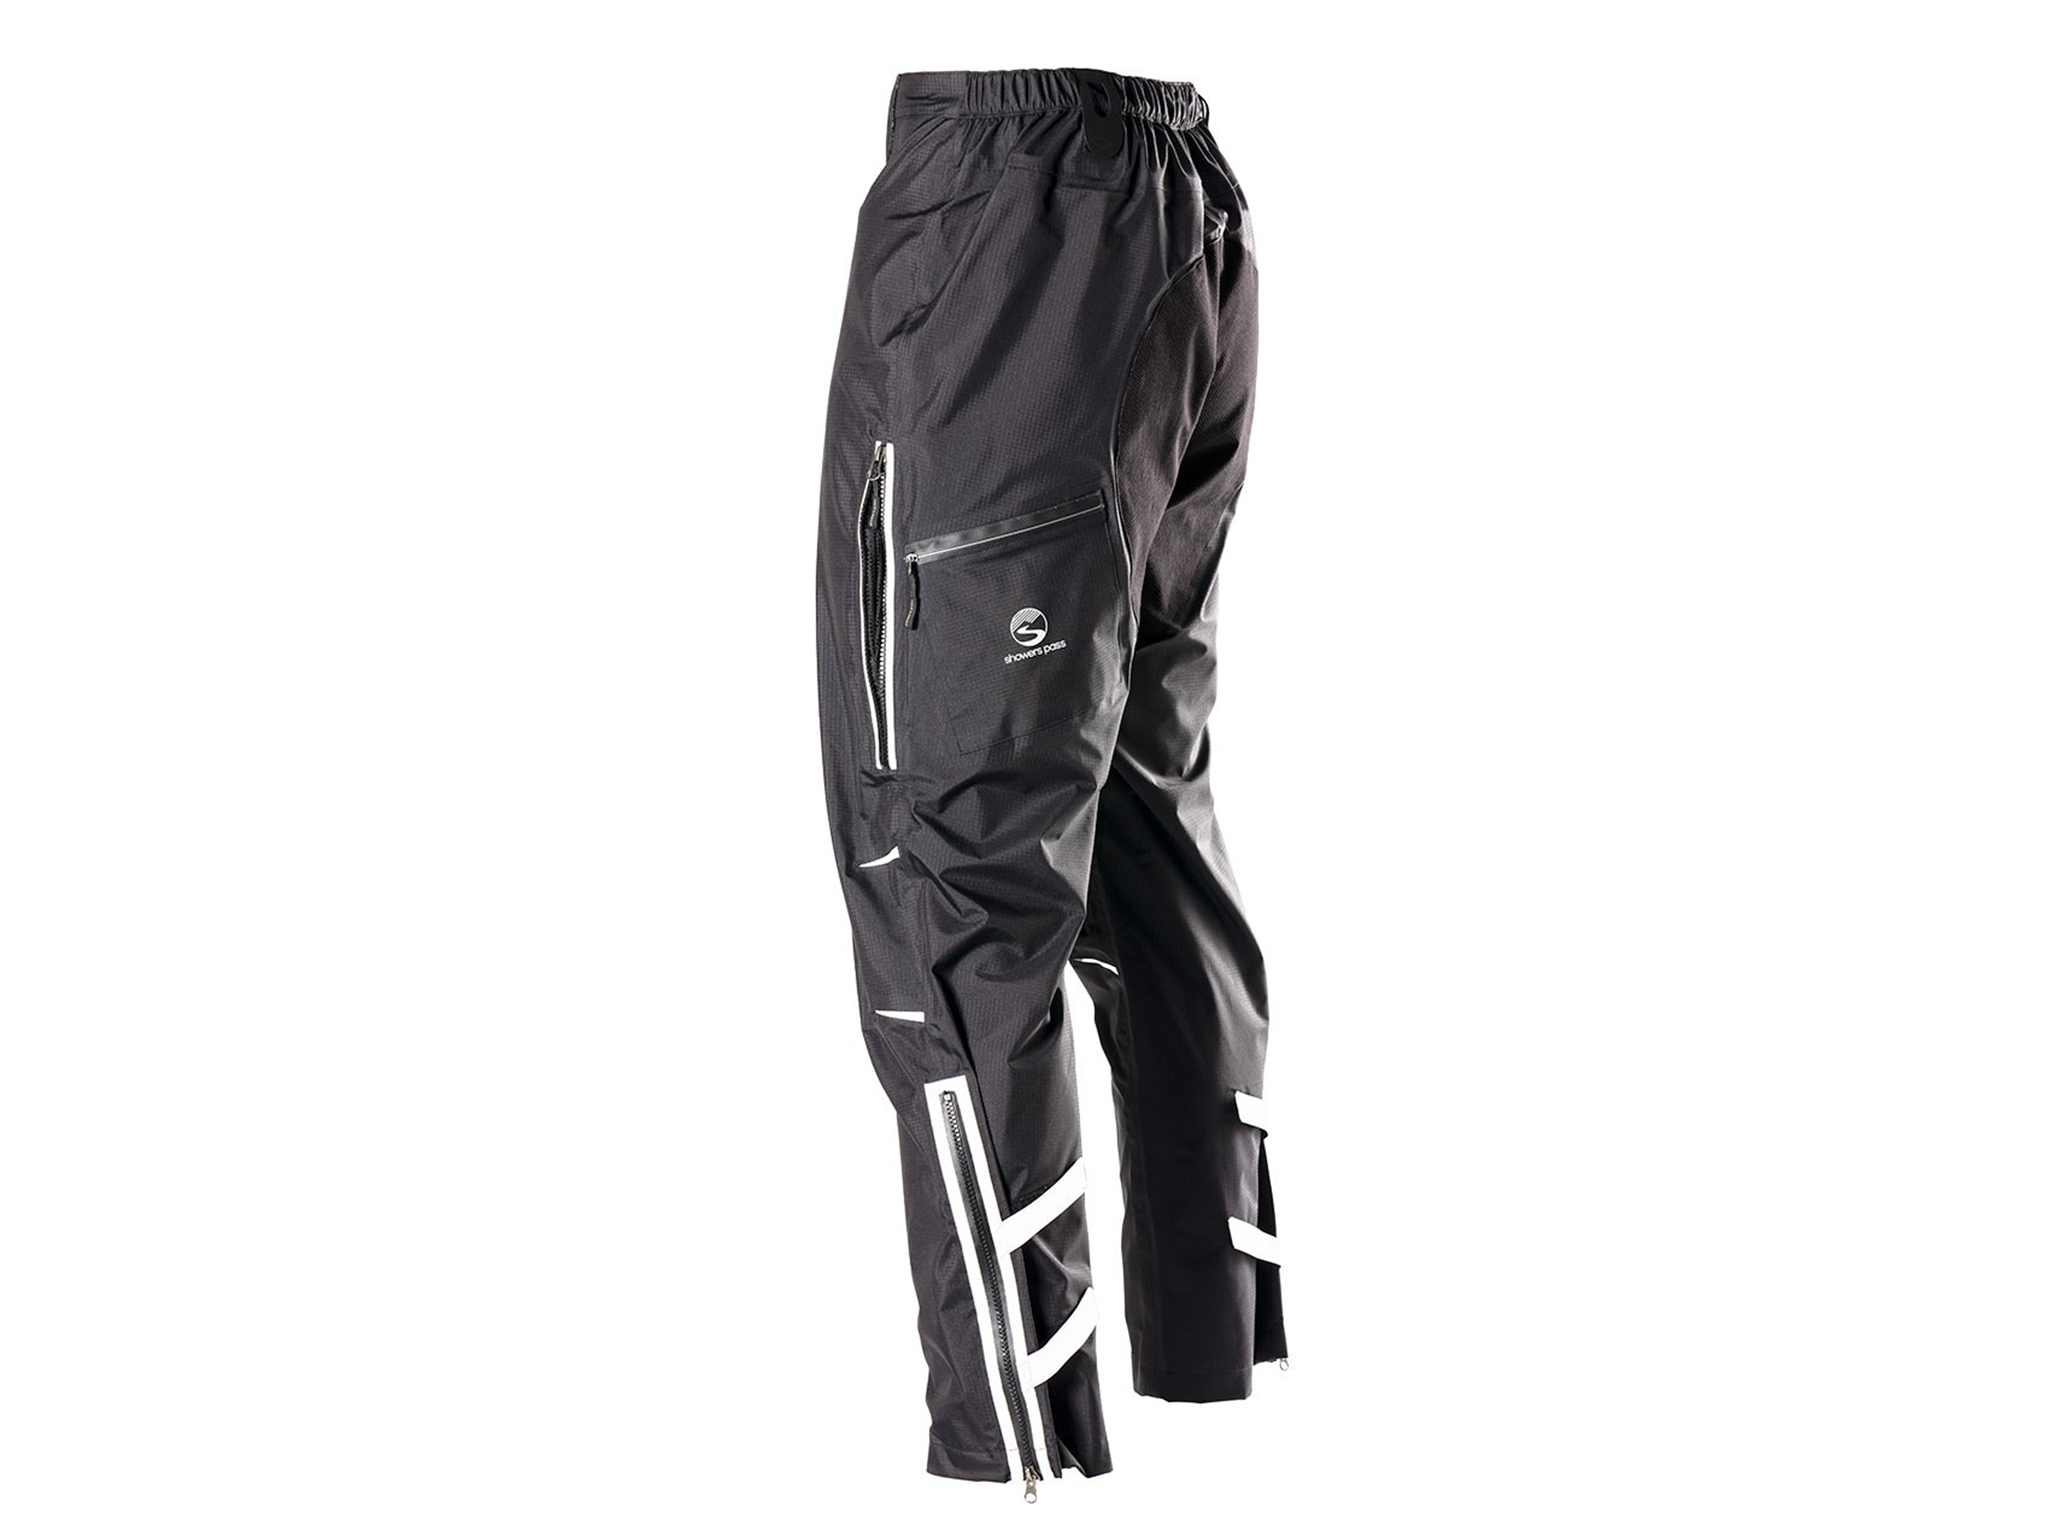 Proviz Nightrider Waterproof Trousers - Ebikes&Mobility - Kapiti, NZ